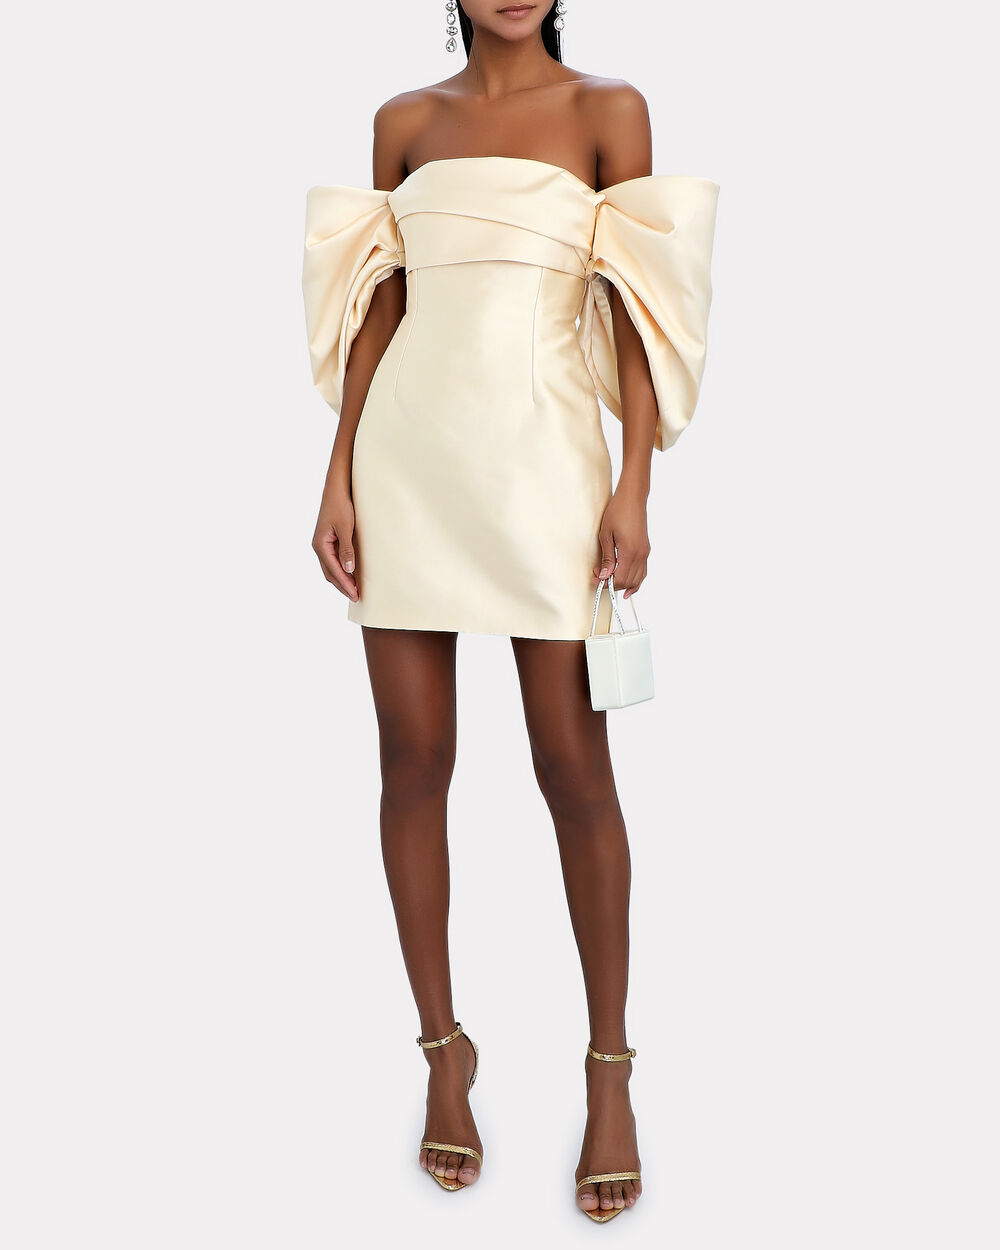 Solace London Elina Off-The-Shoulder Duchesse Satin Mini Dress in Ivory | INTERMIX®